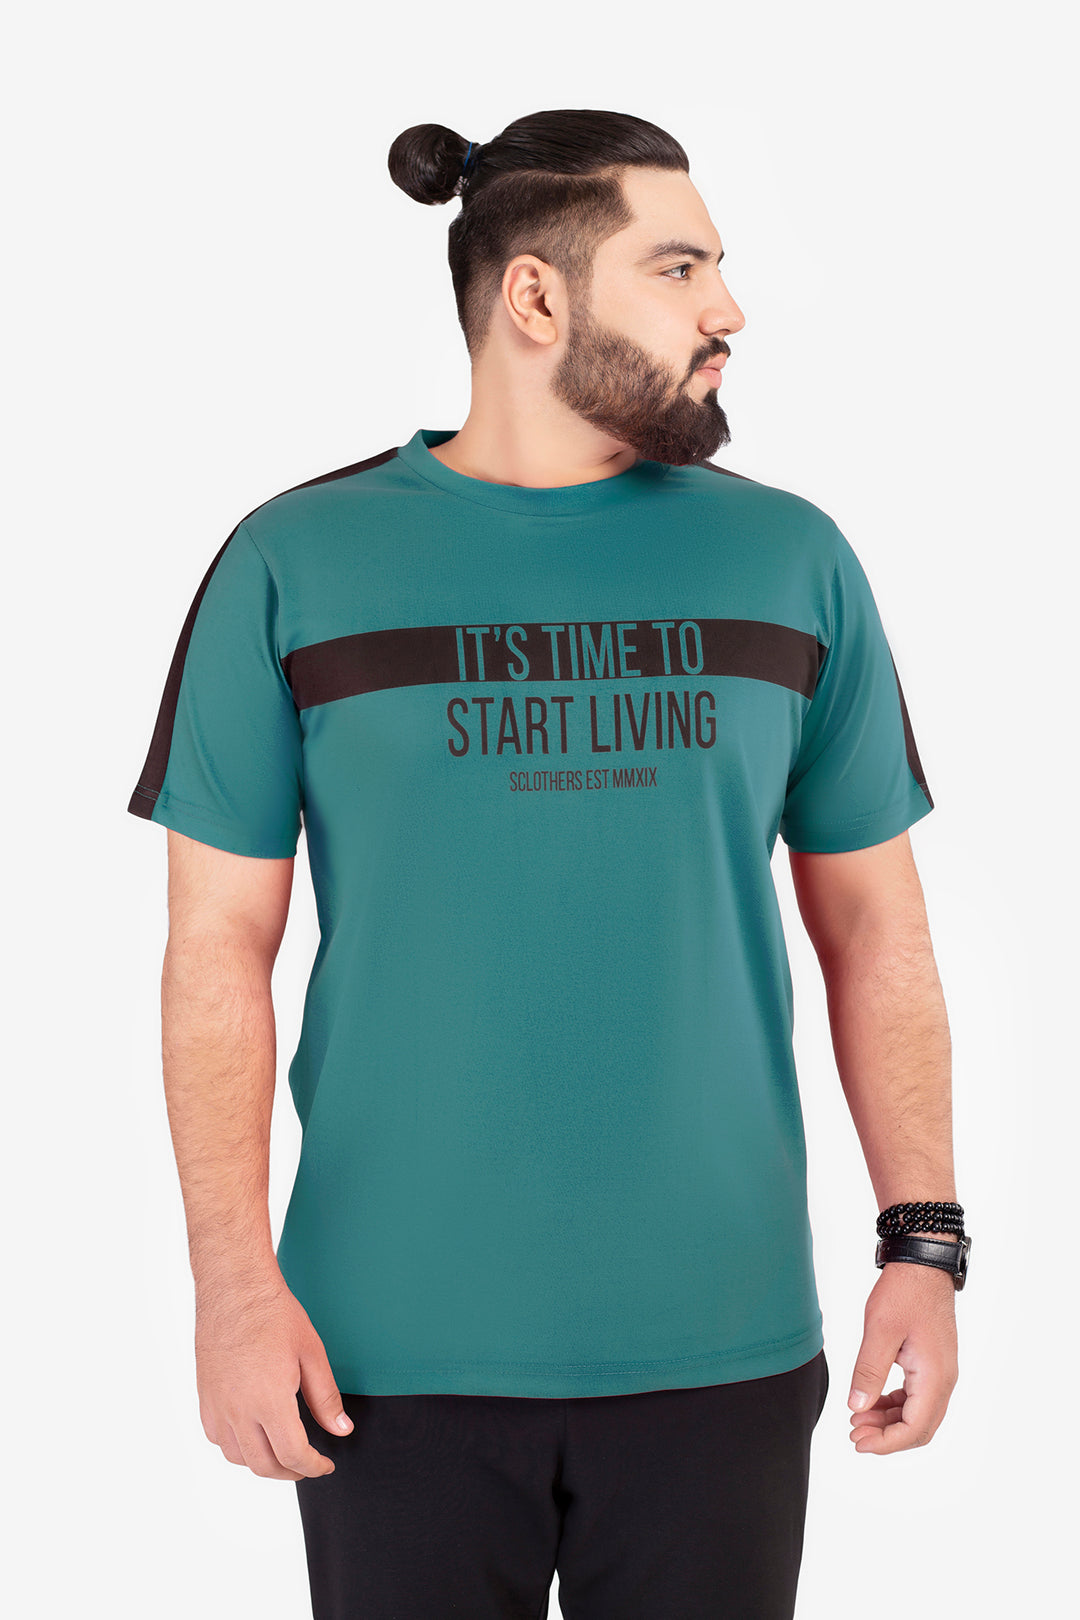 Plus Size Motivational T-Shirts in Pakistan